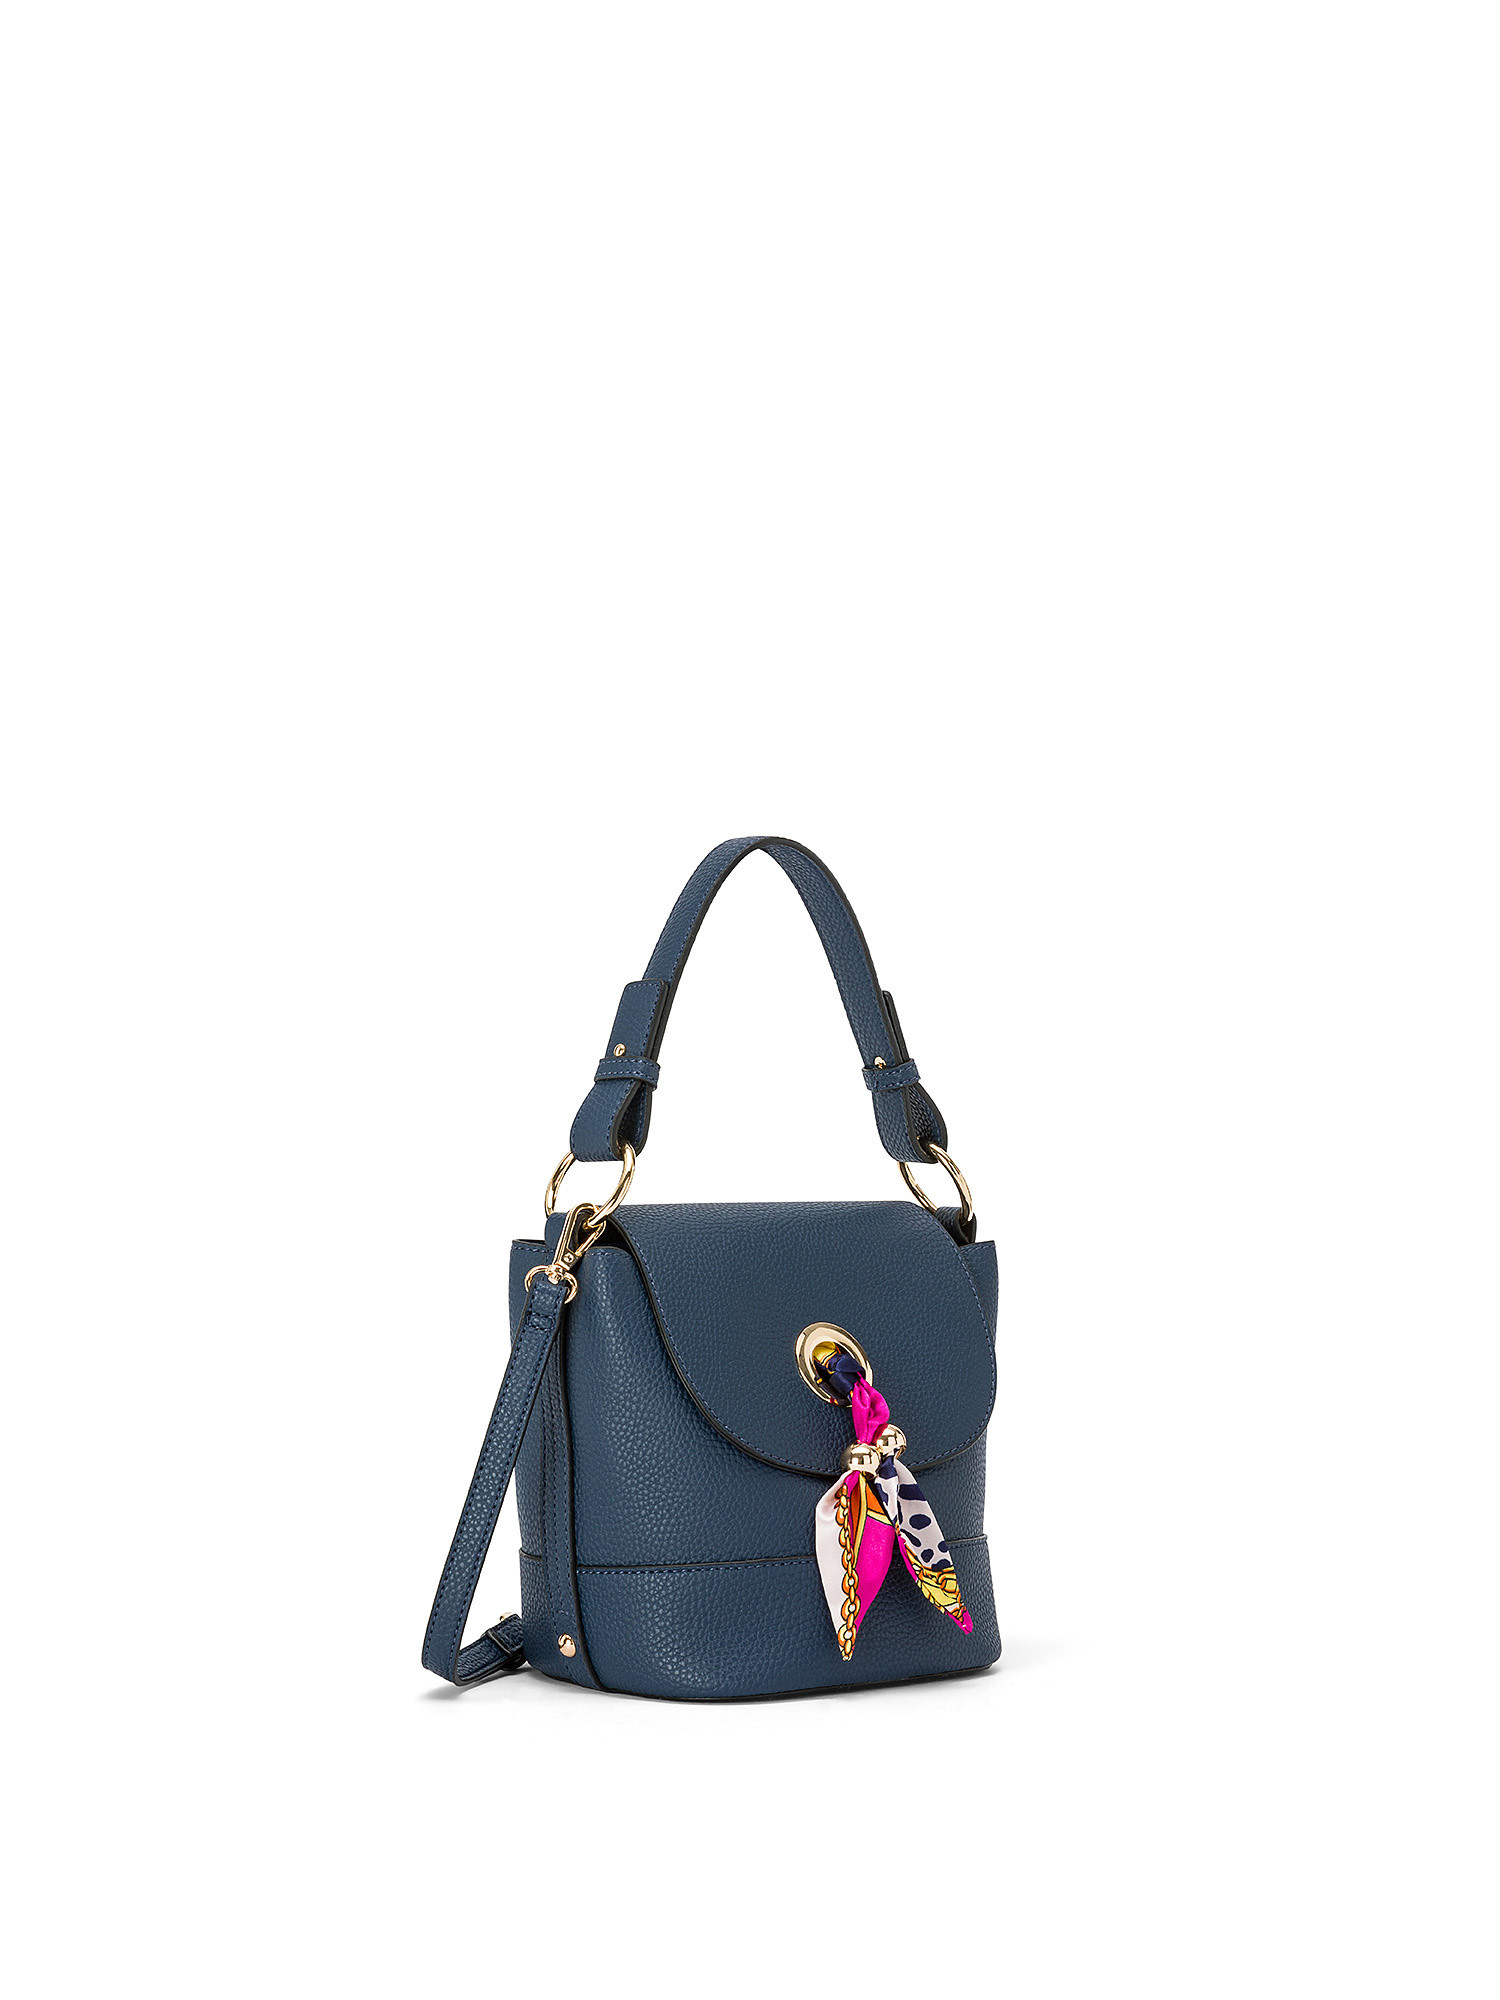 Koan - Handbag, Dark Blue, large image number 1